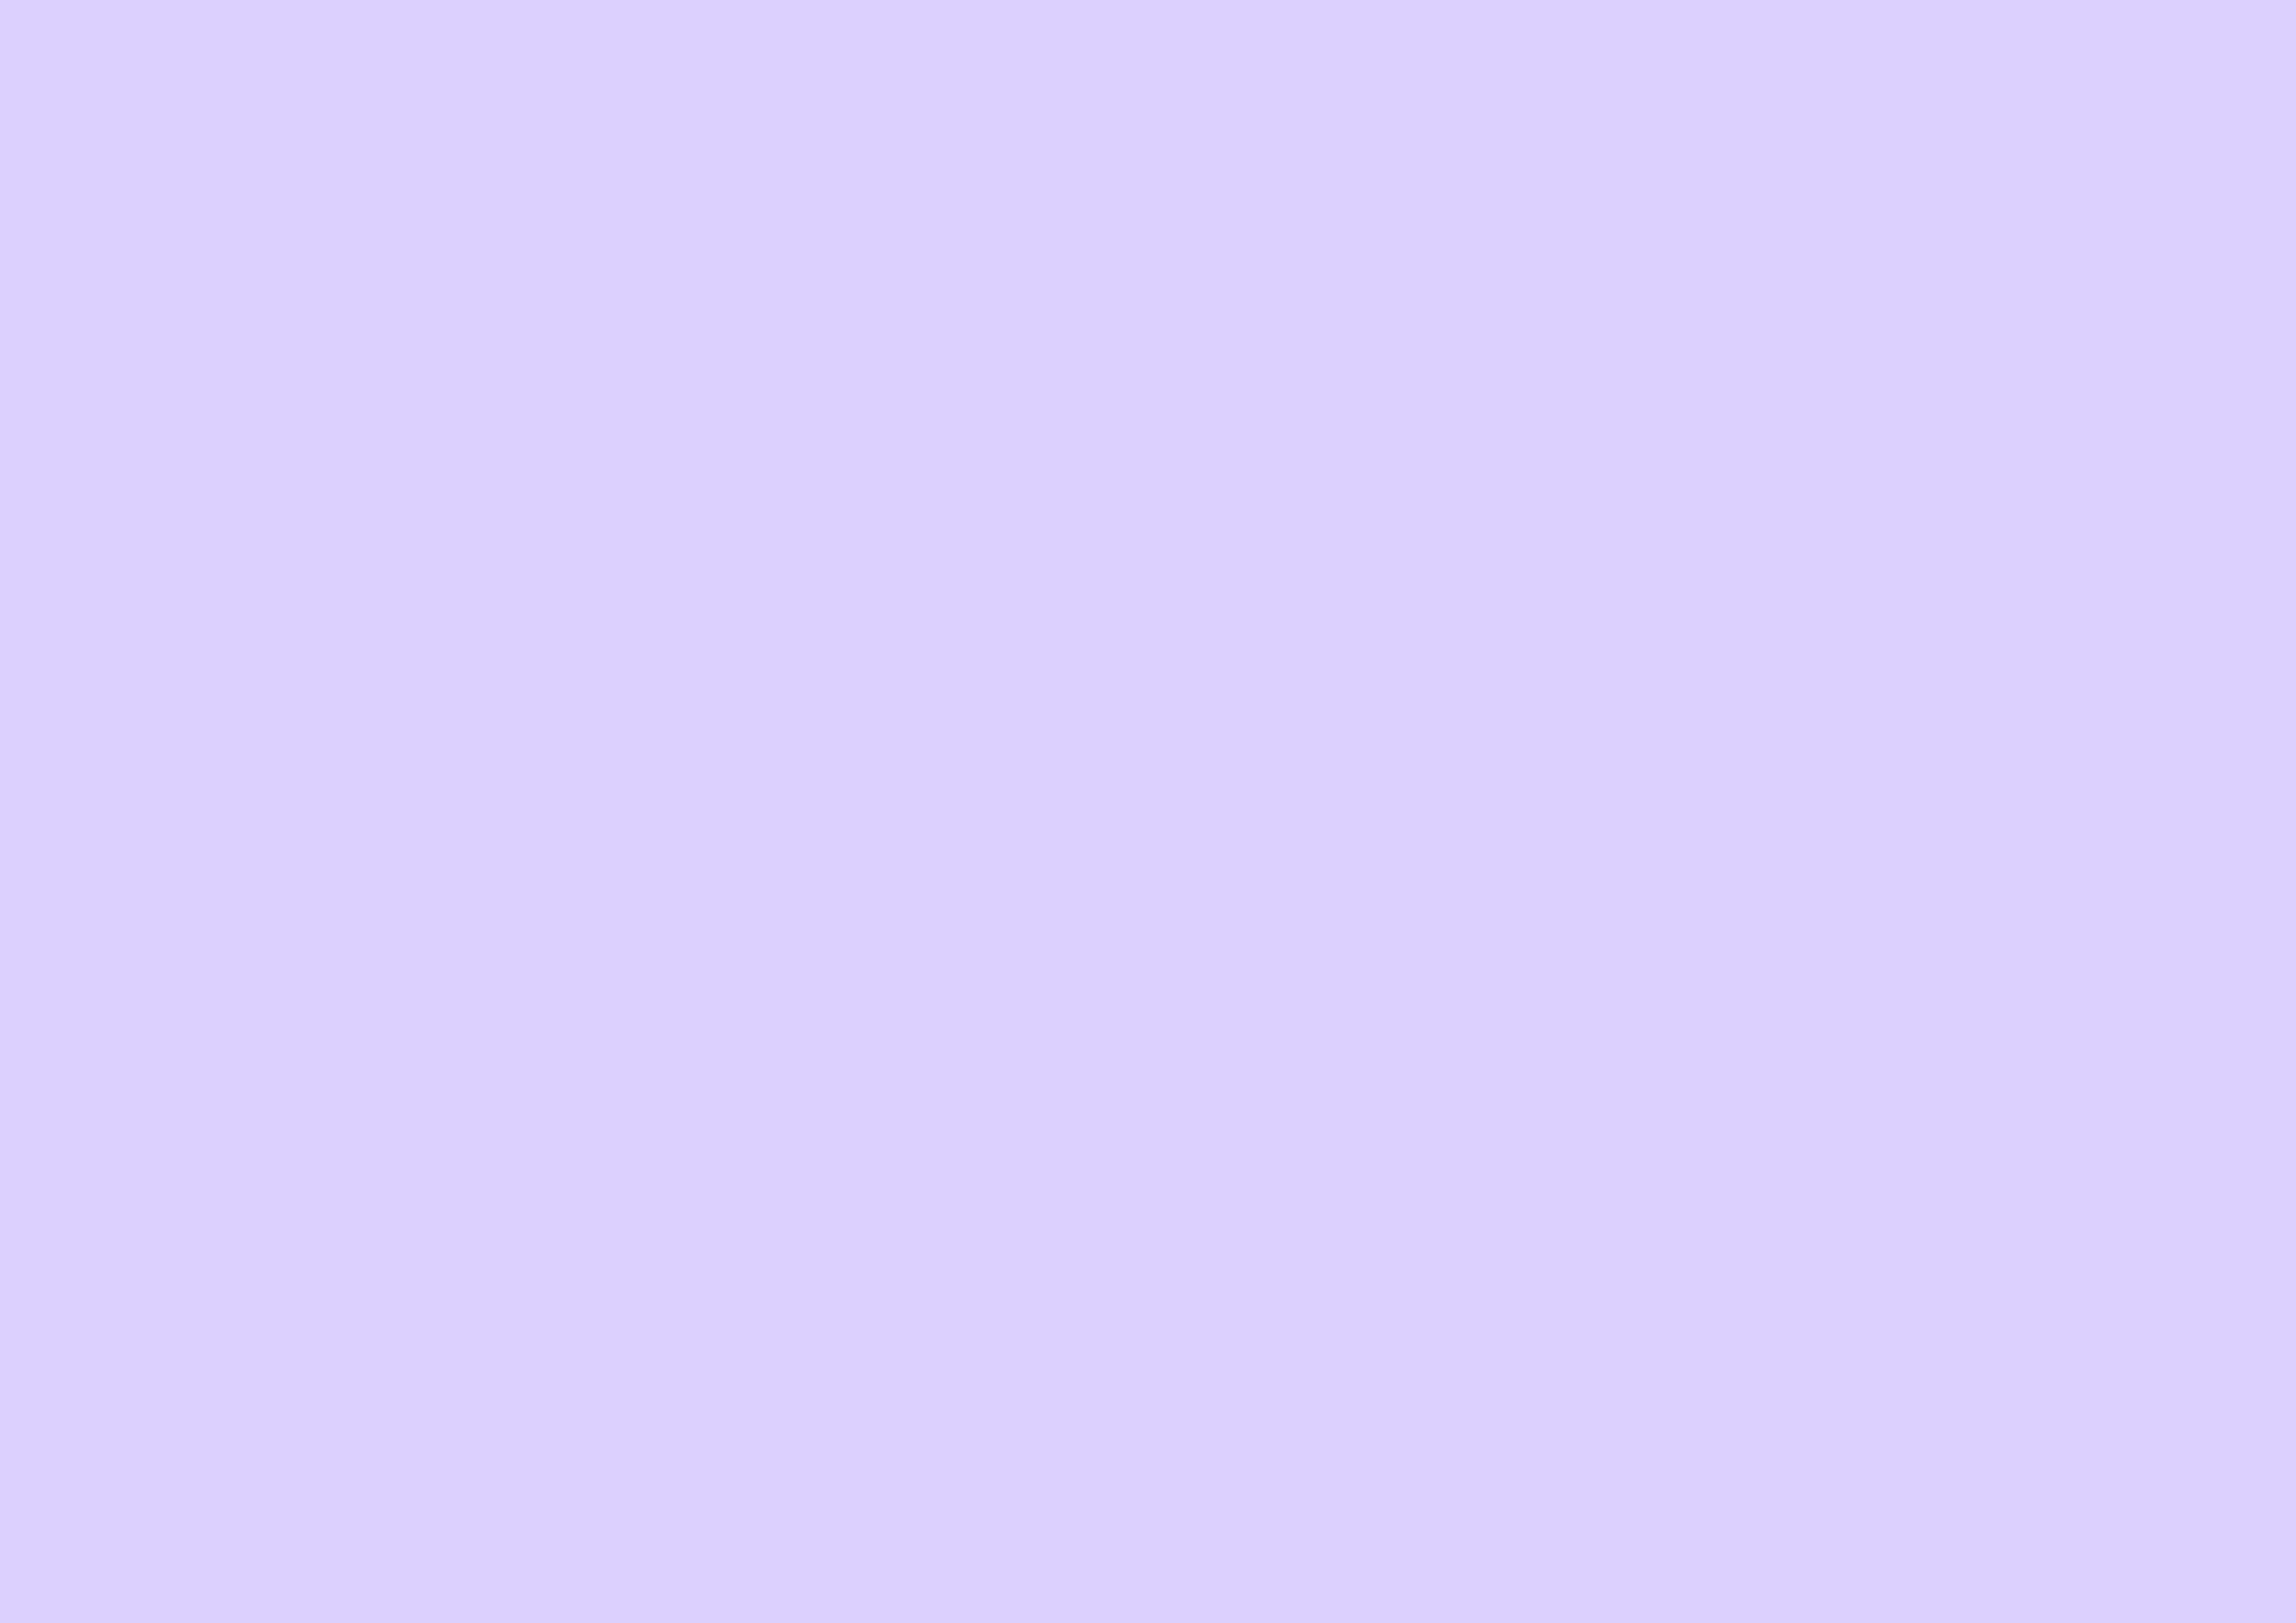 3508x2480 Pale Lavender Solid Color Background